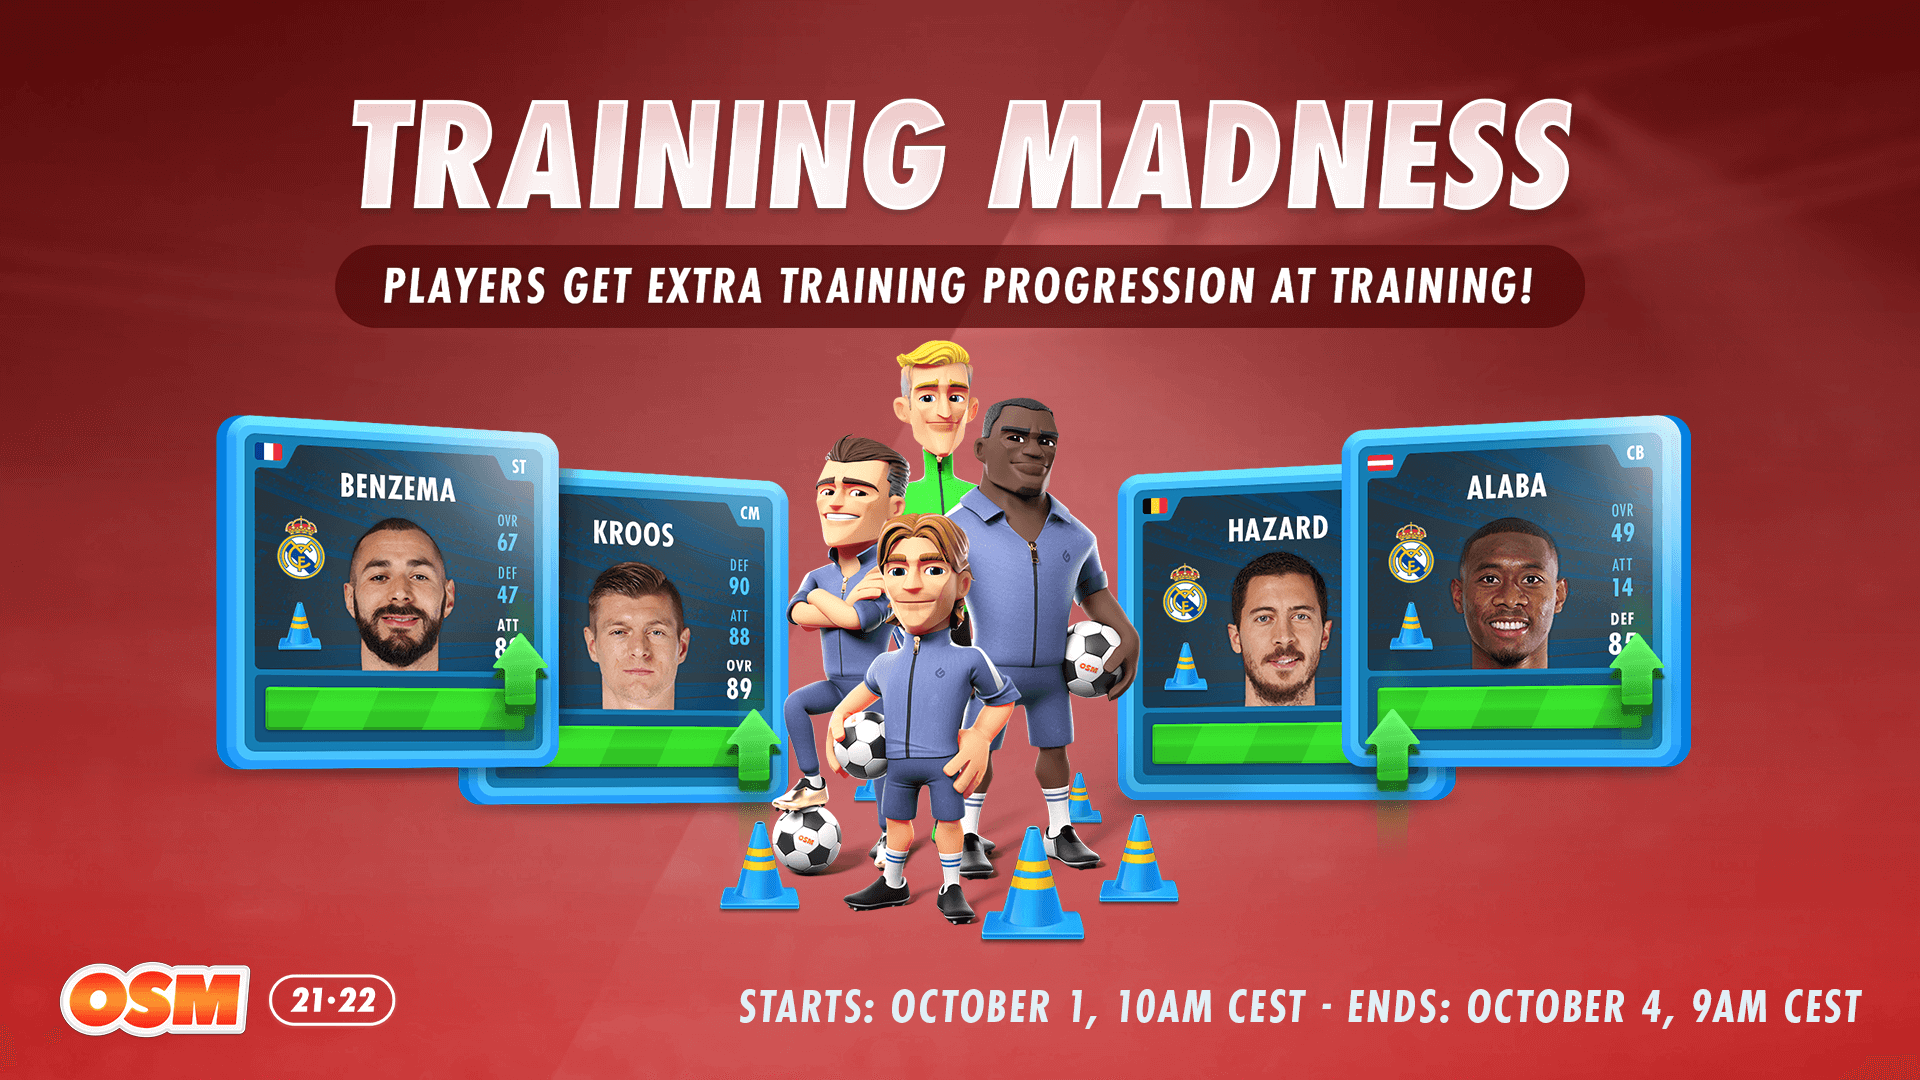 Forum_Training Madness_REDDIT.png